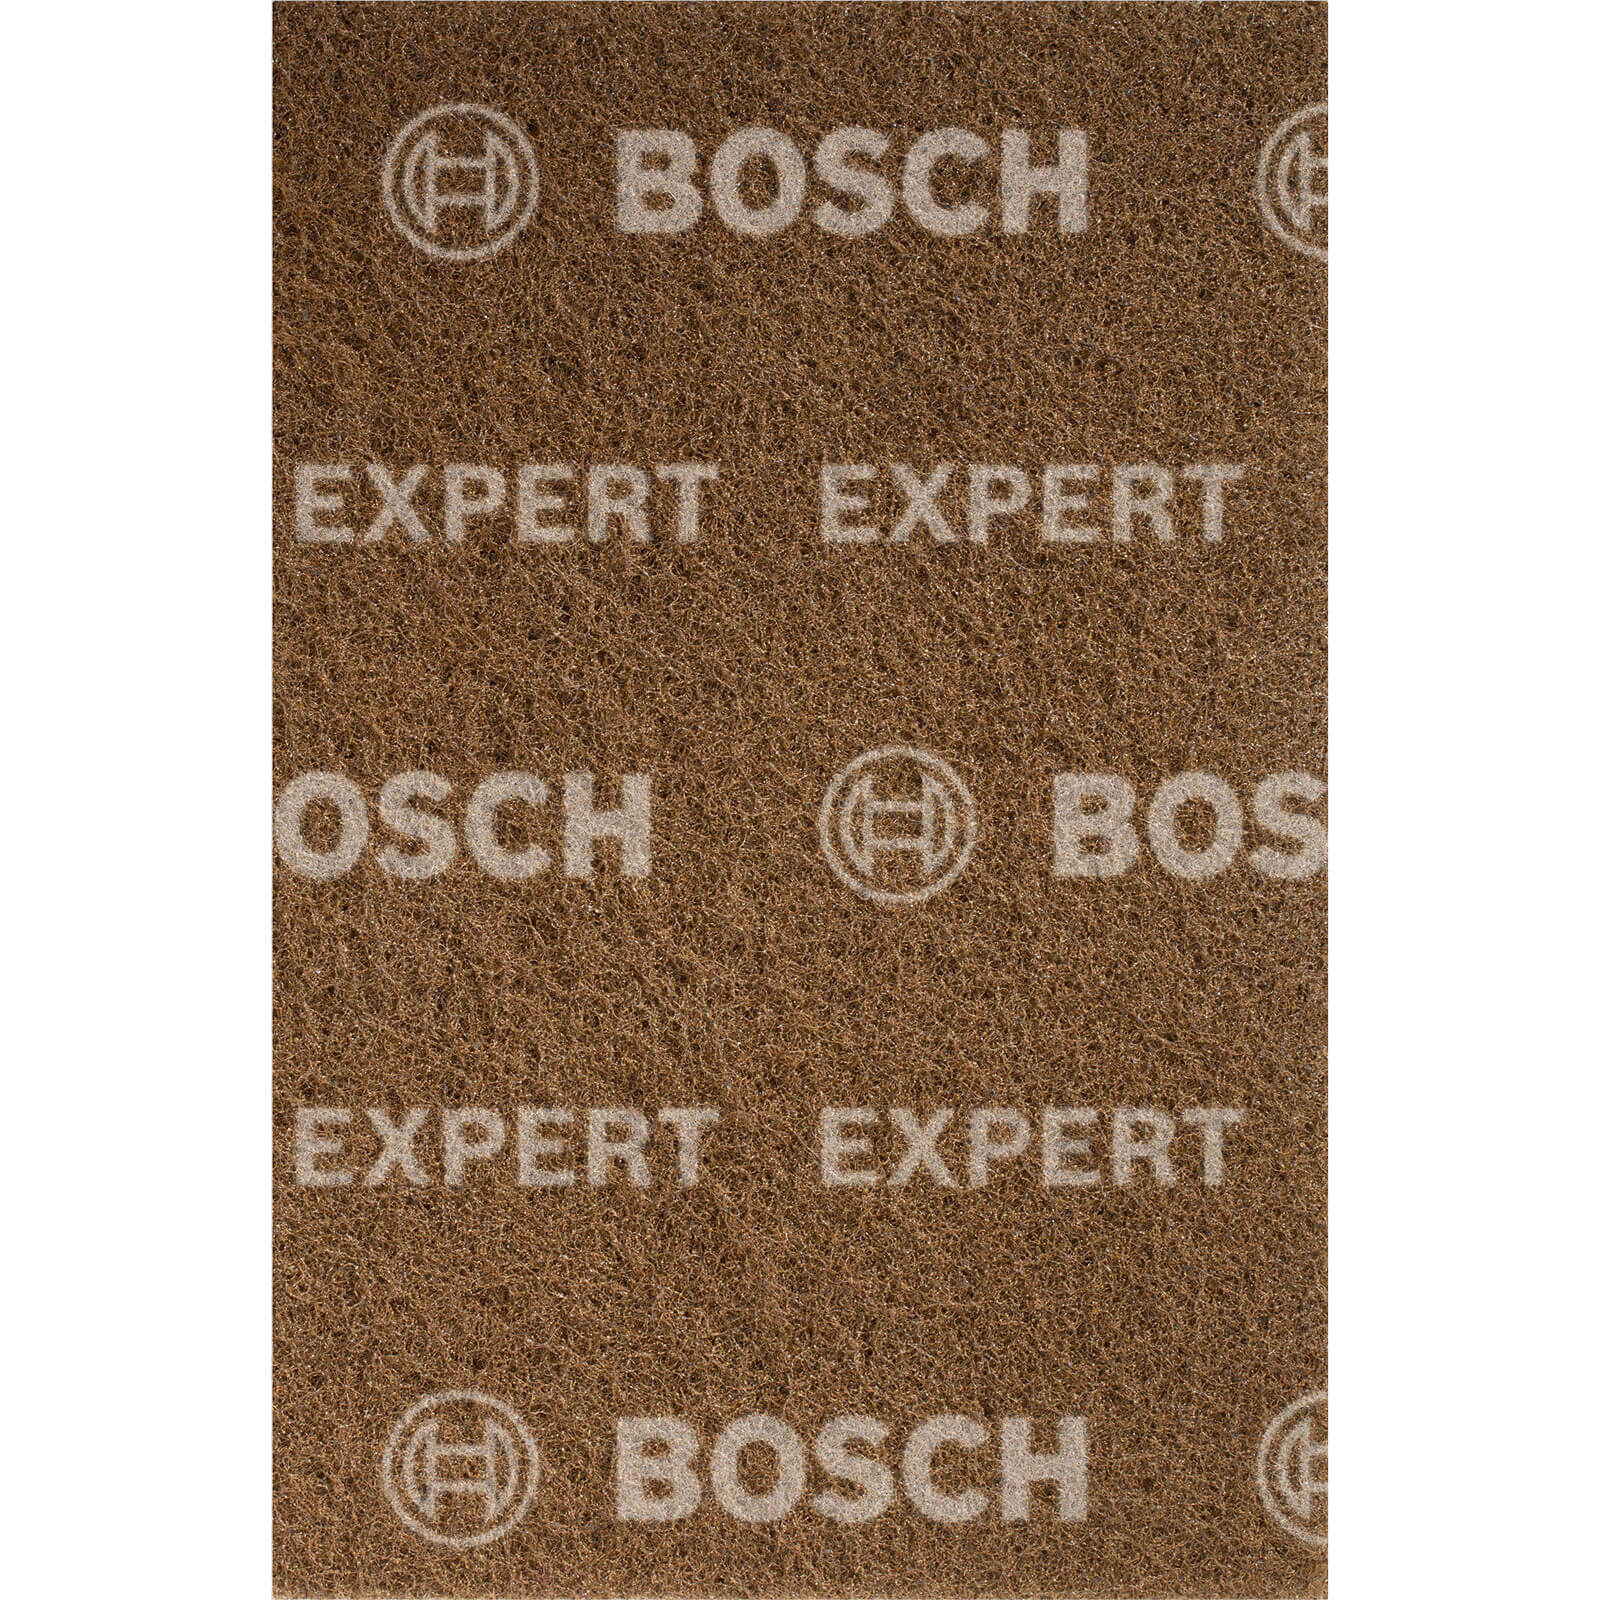 Photo of Bosch Expert N880 Fleece Hand Pad Coarse Pack Of 1